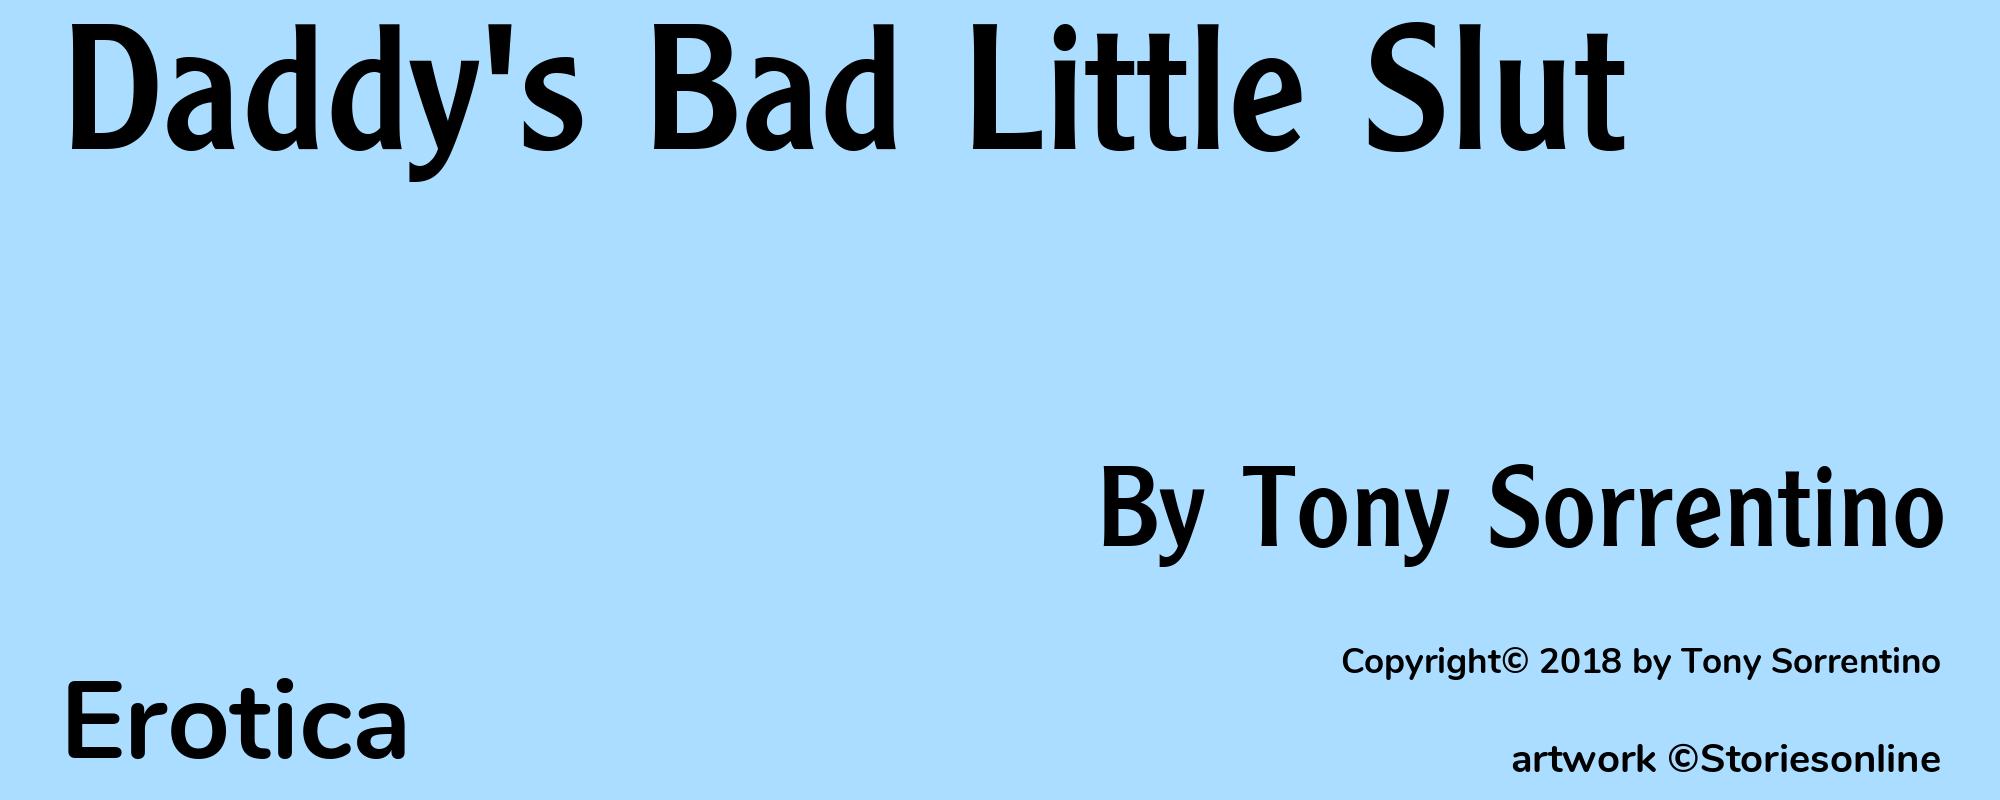 Daddy's Bad Little Slut - Cover